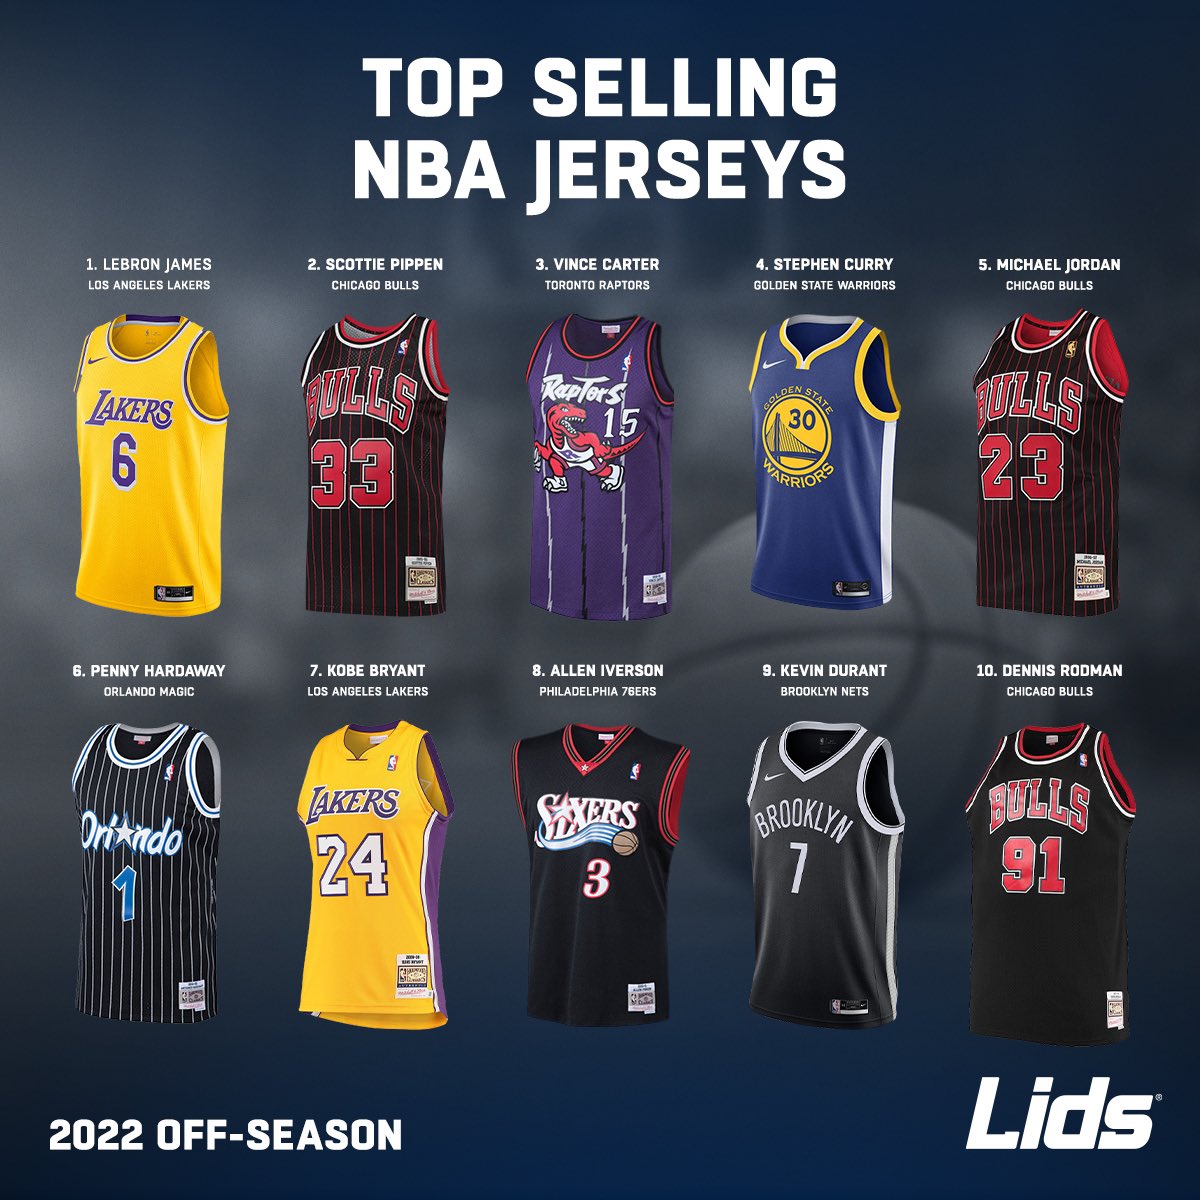 most selling nba jerseys 2022